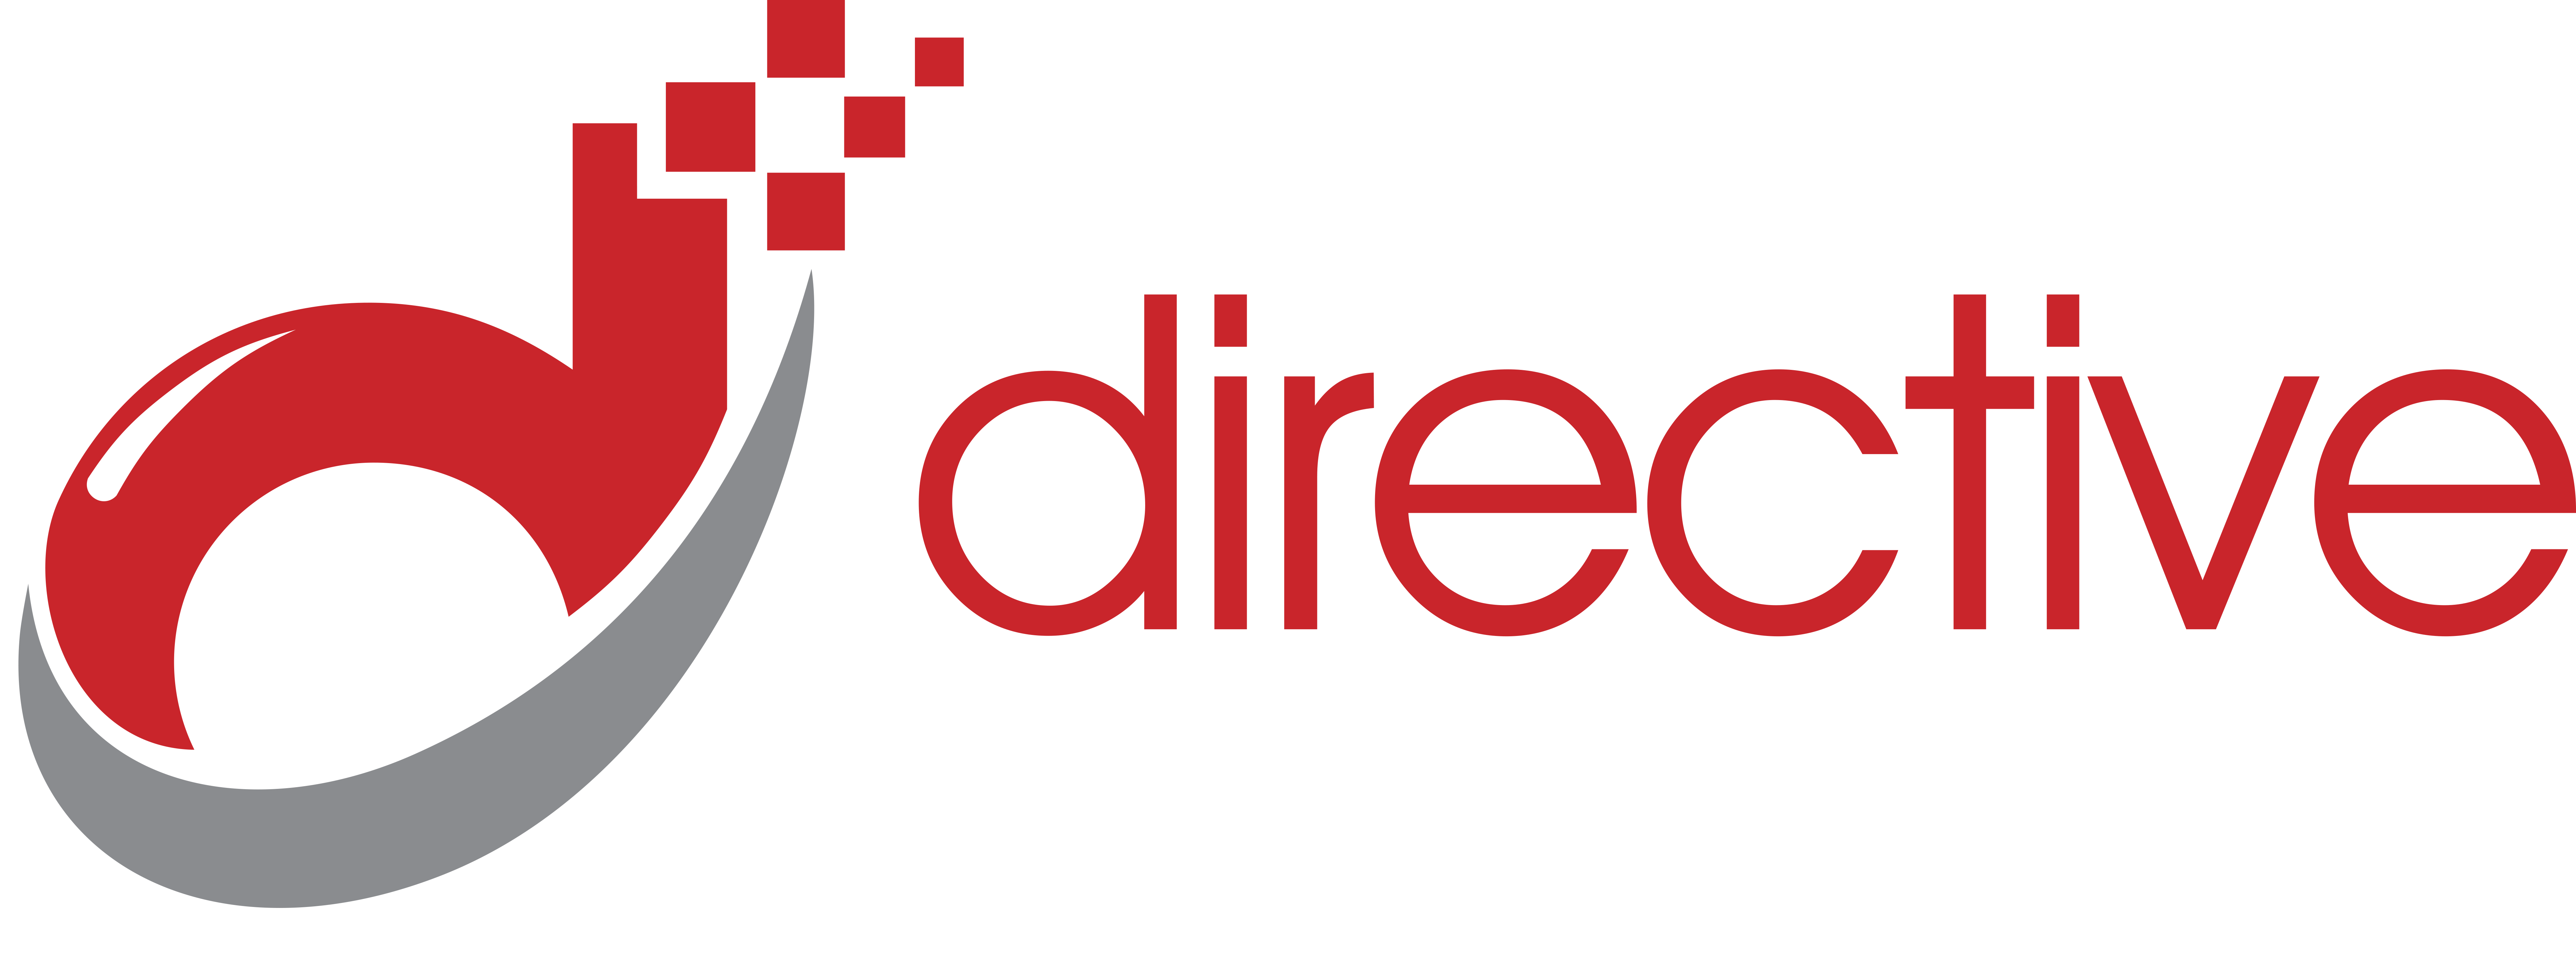 directive logo master